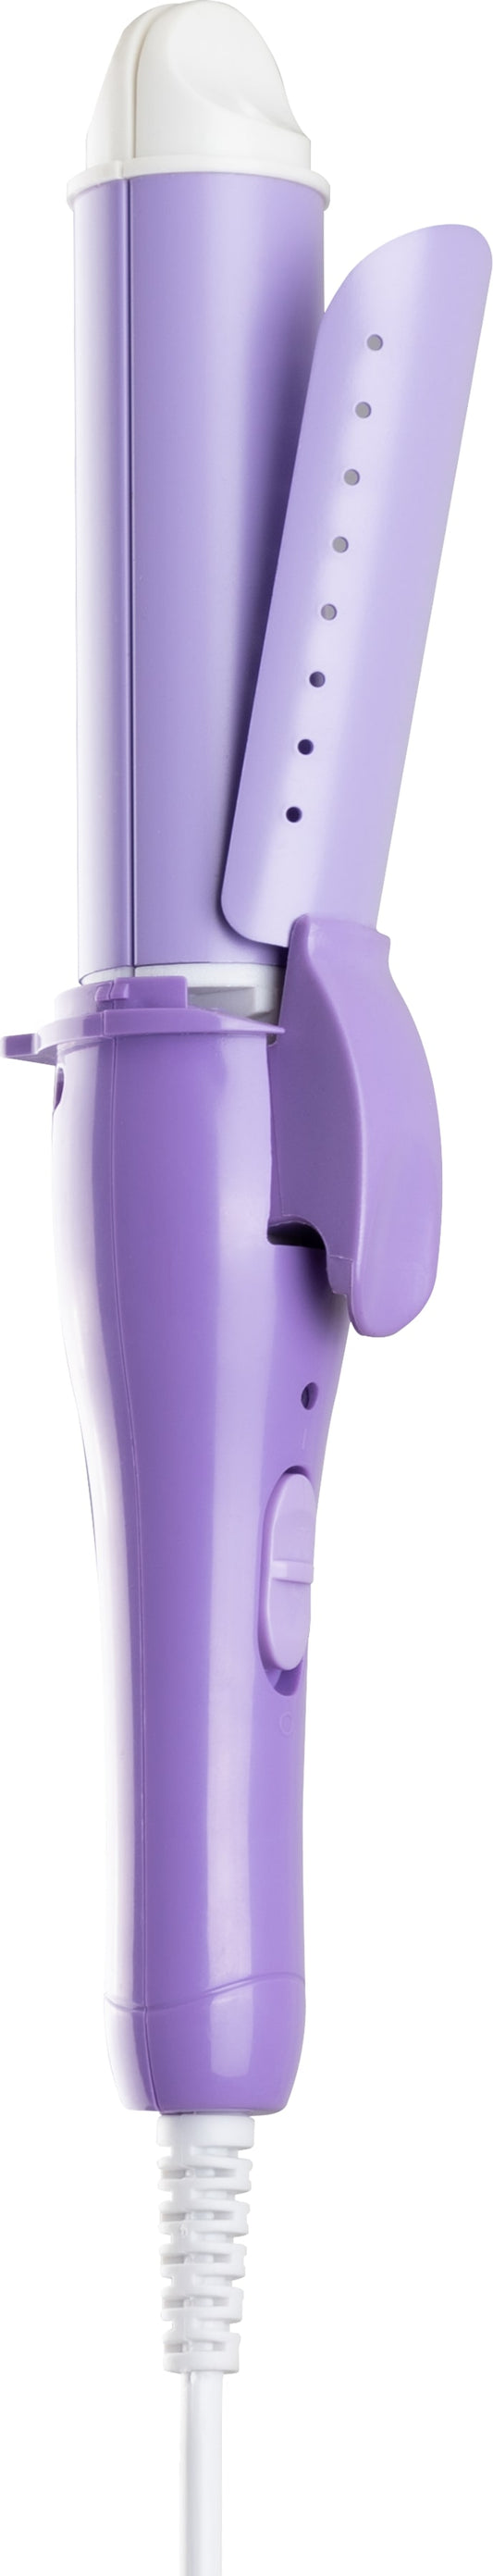 [OPEN BOX] Instabella Leyla 2-in-1 Hair Straightener and Curl Creator HS-479 - Blush Purple